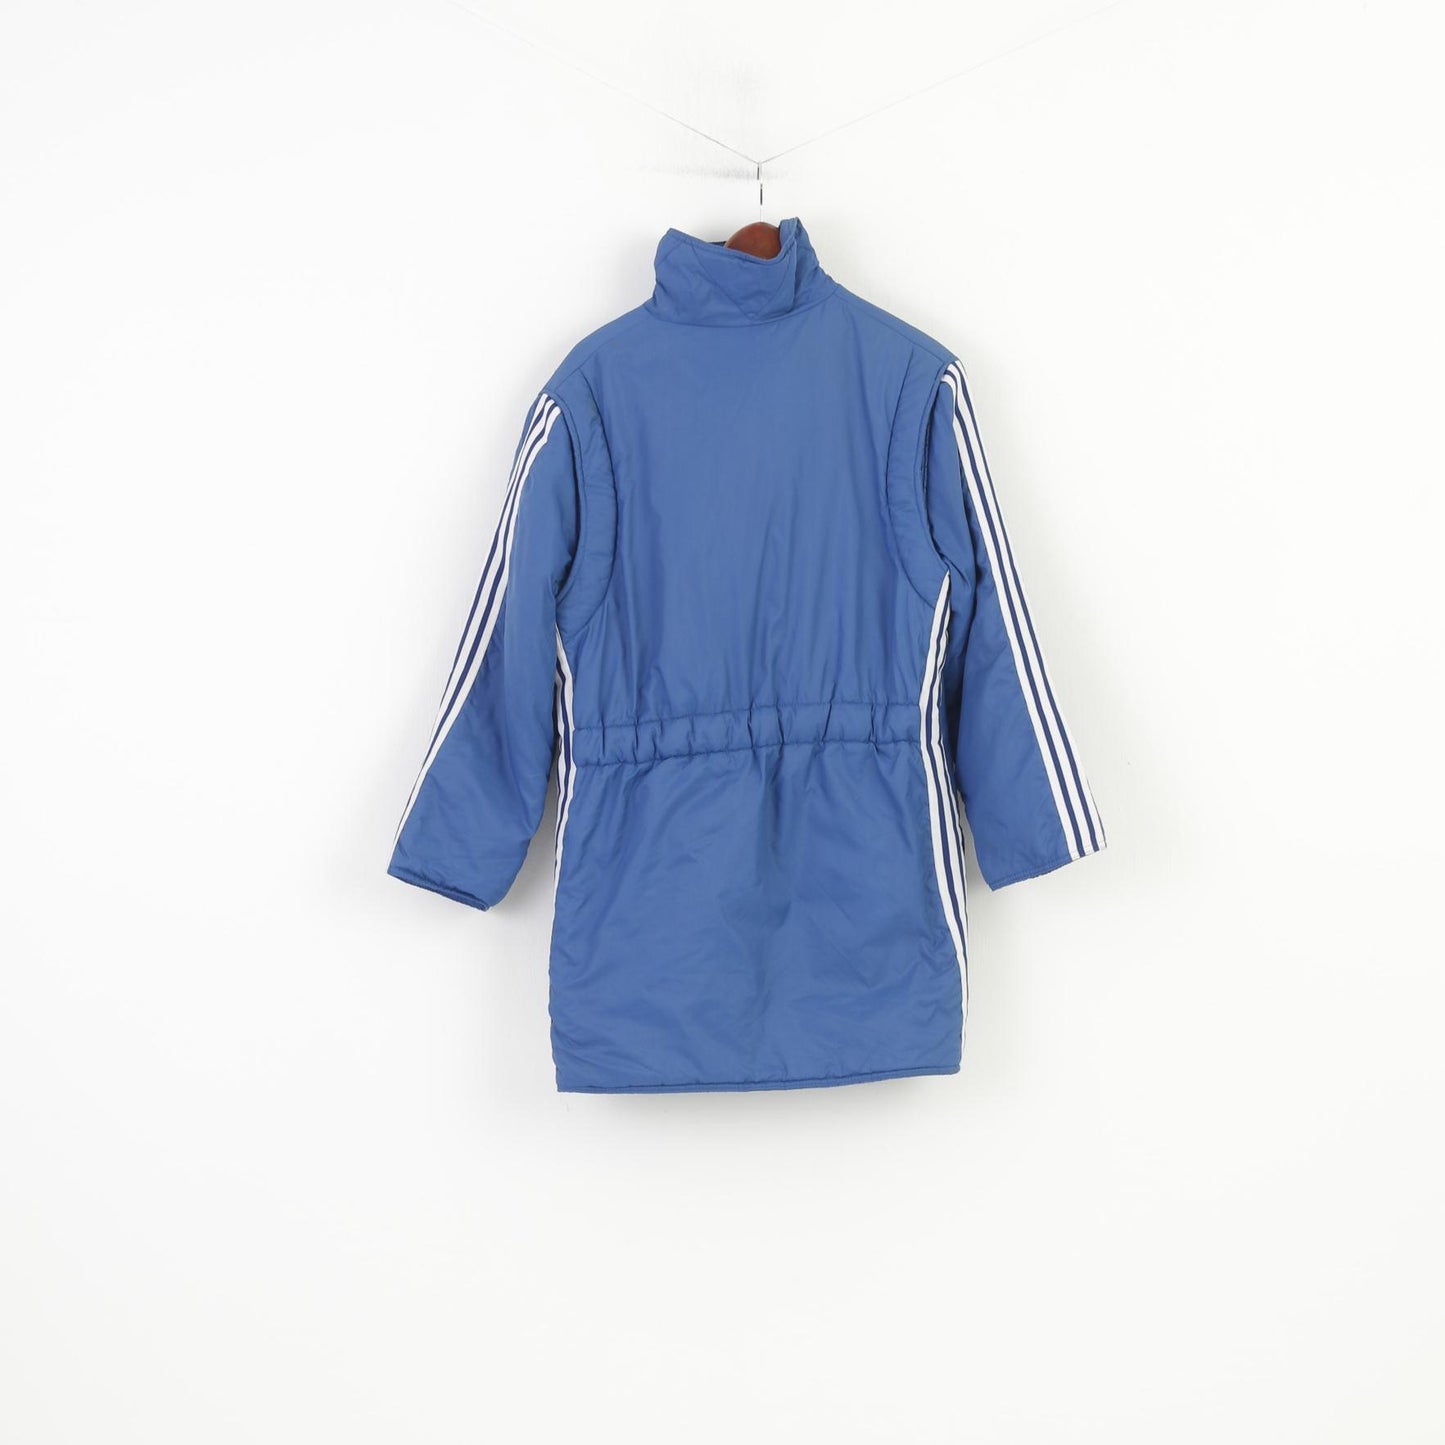 Adidas Men XS Jacket Blue Nylon Vintage 80s Full Zipper Padded Oldschool Top